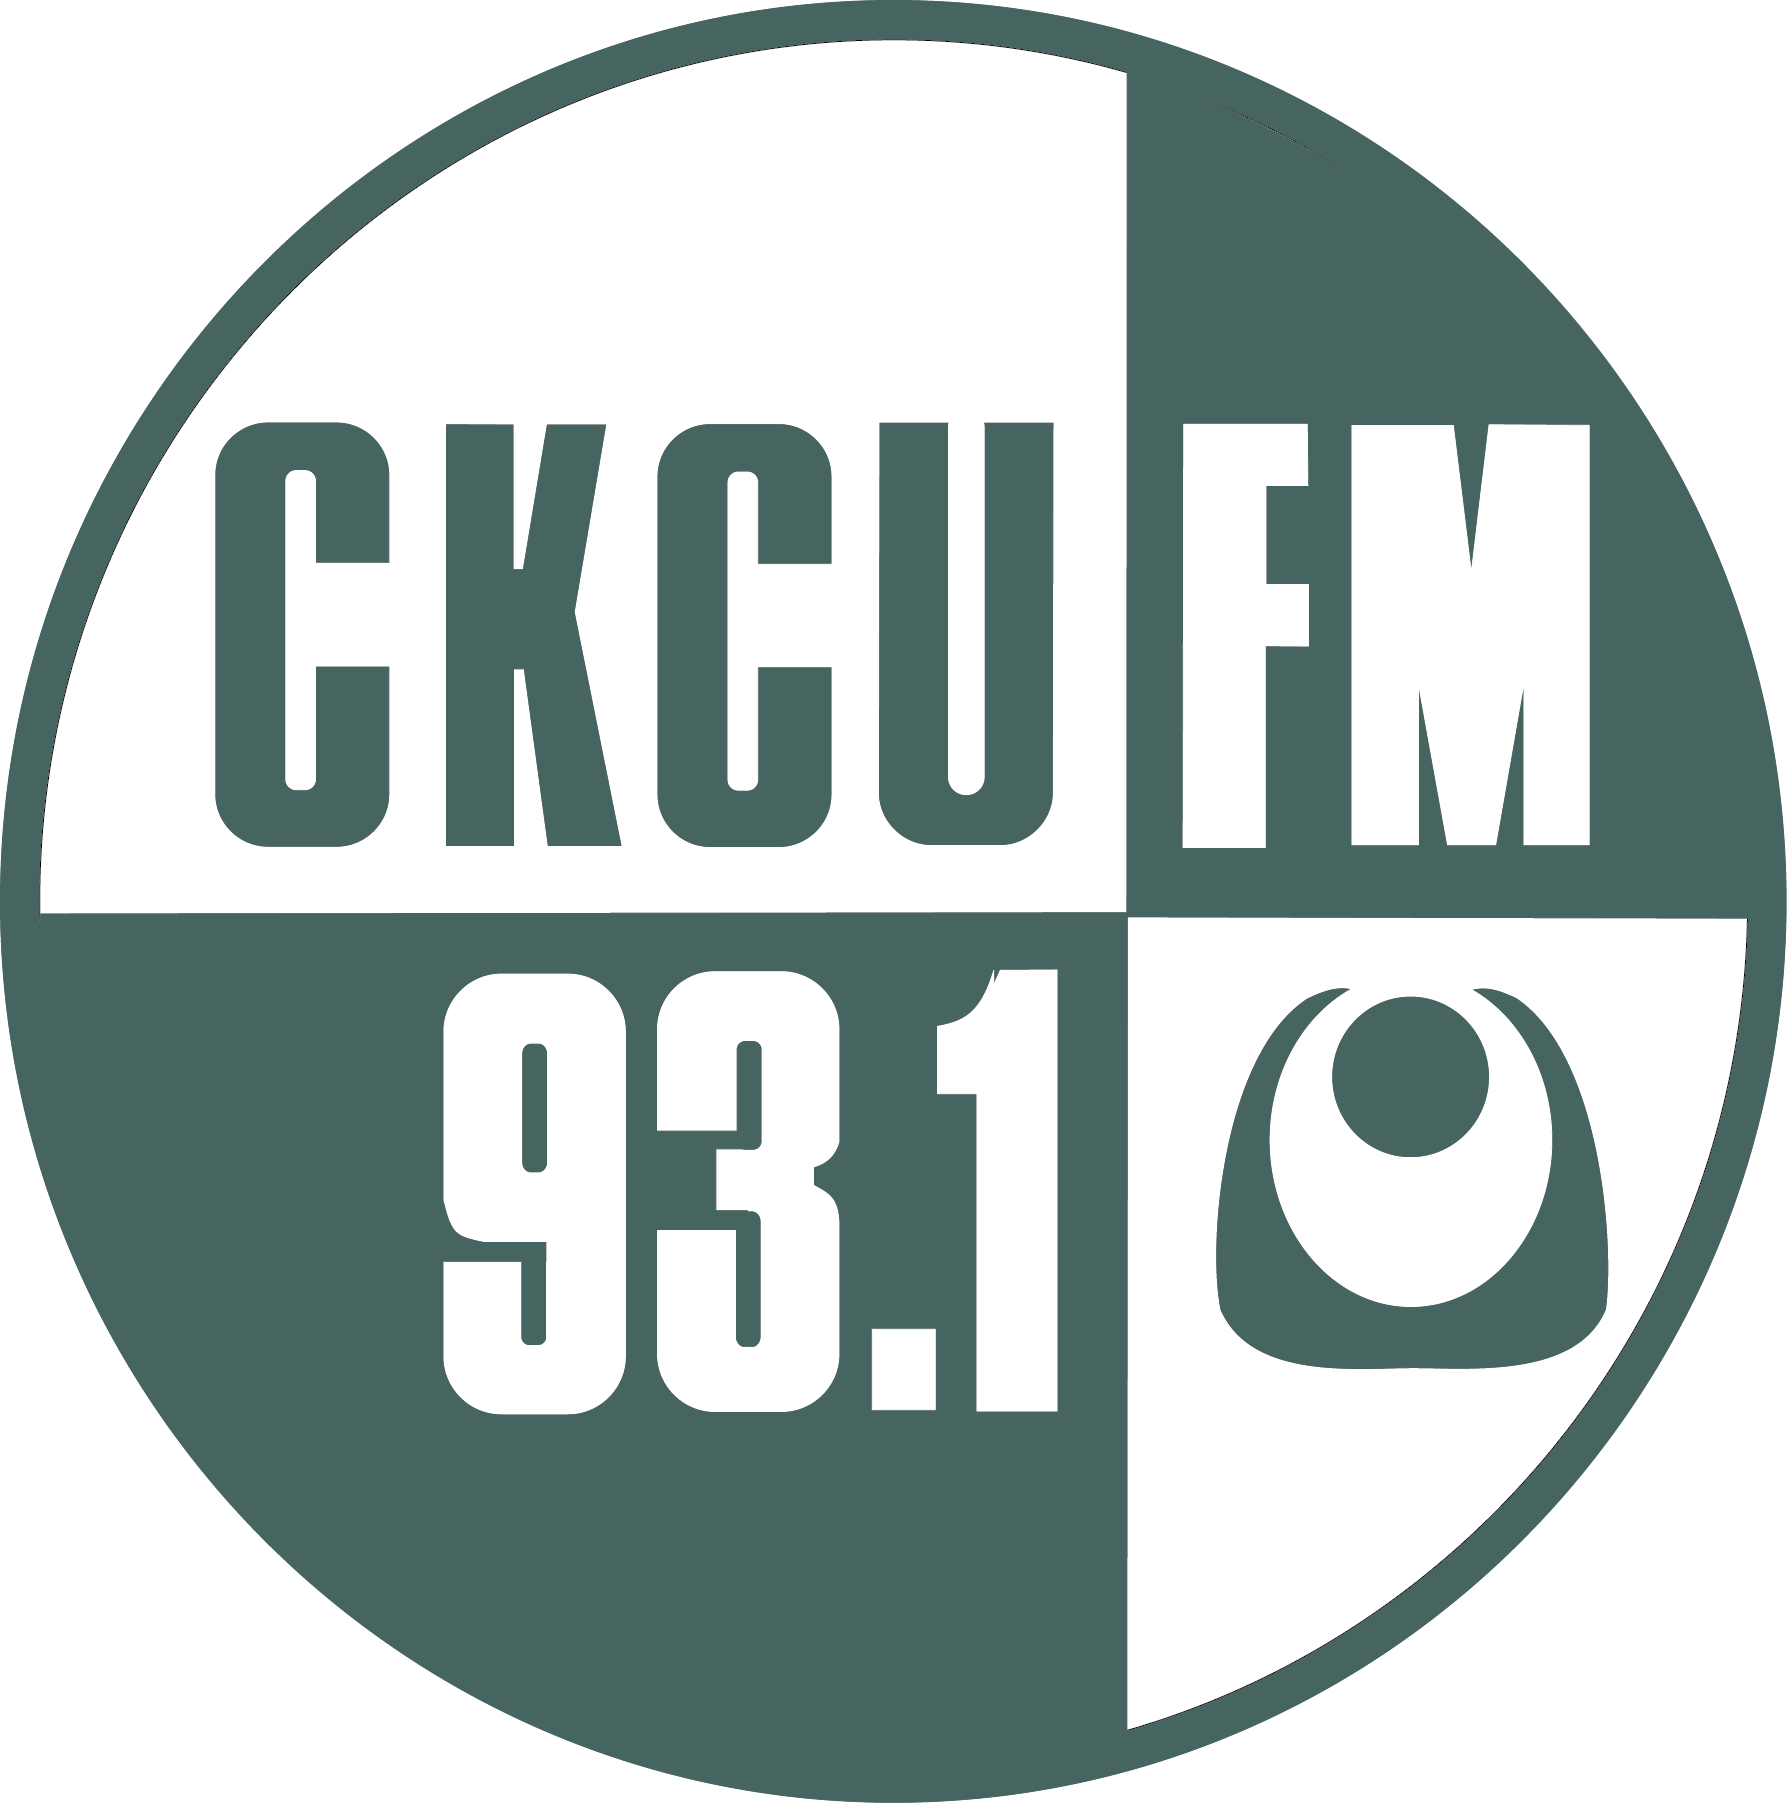 CKCU-FM 93.1